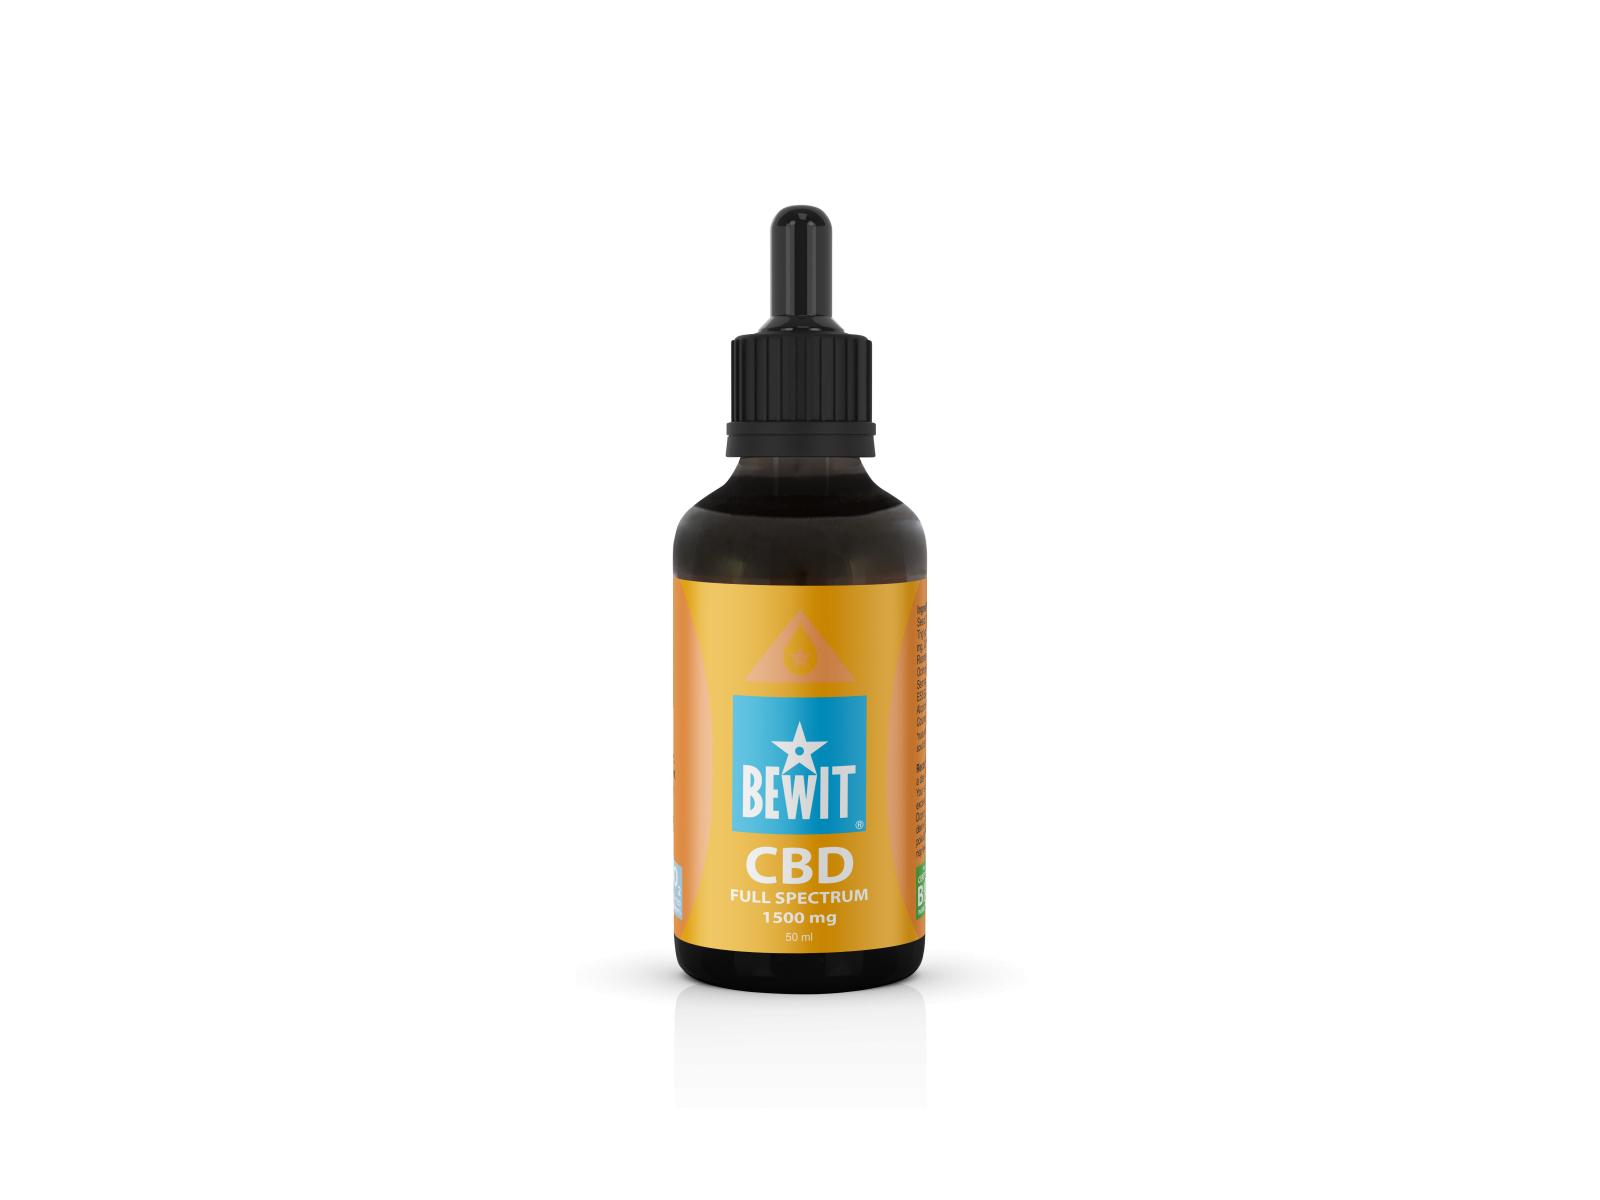 BEWIT CBD FULL SPECTRUM 1500 mg - IN ORGANIC HEMP OIL - 2